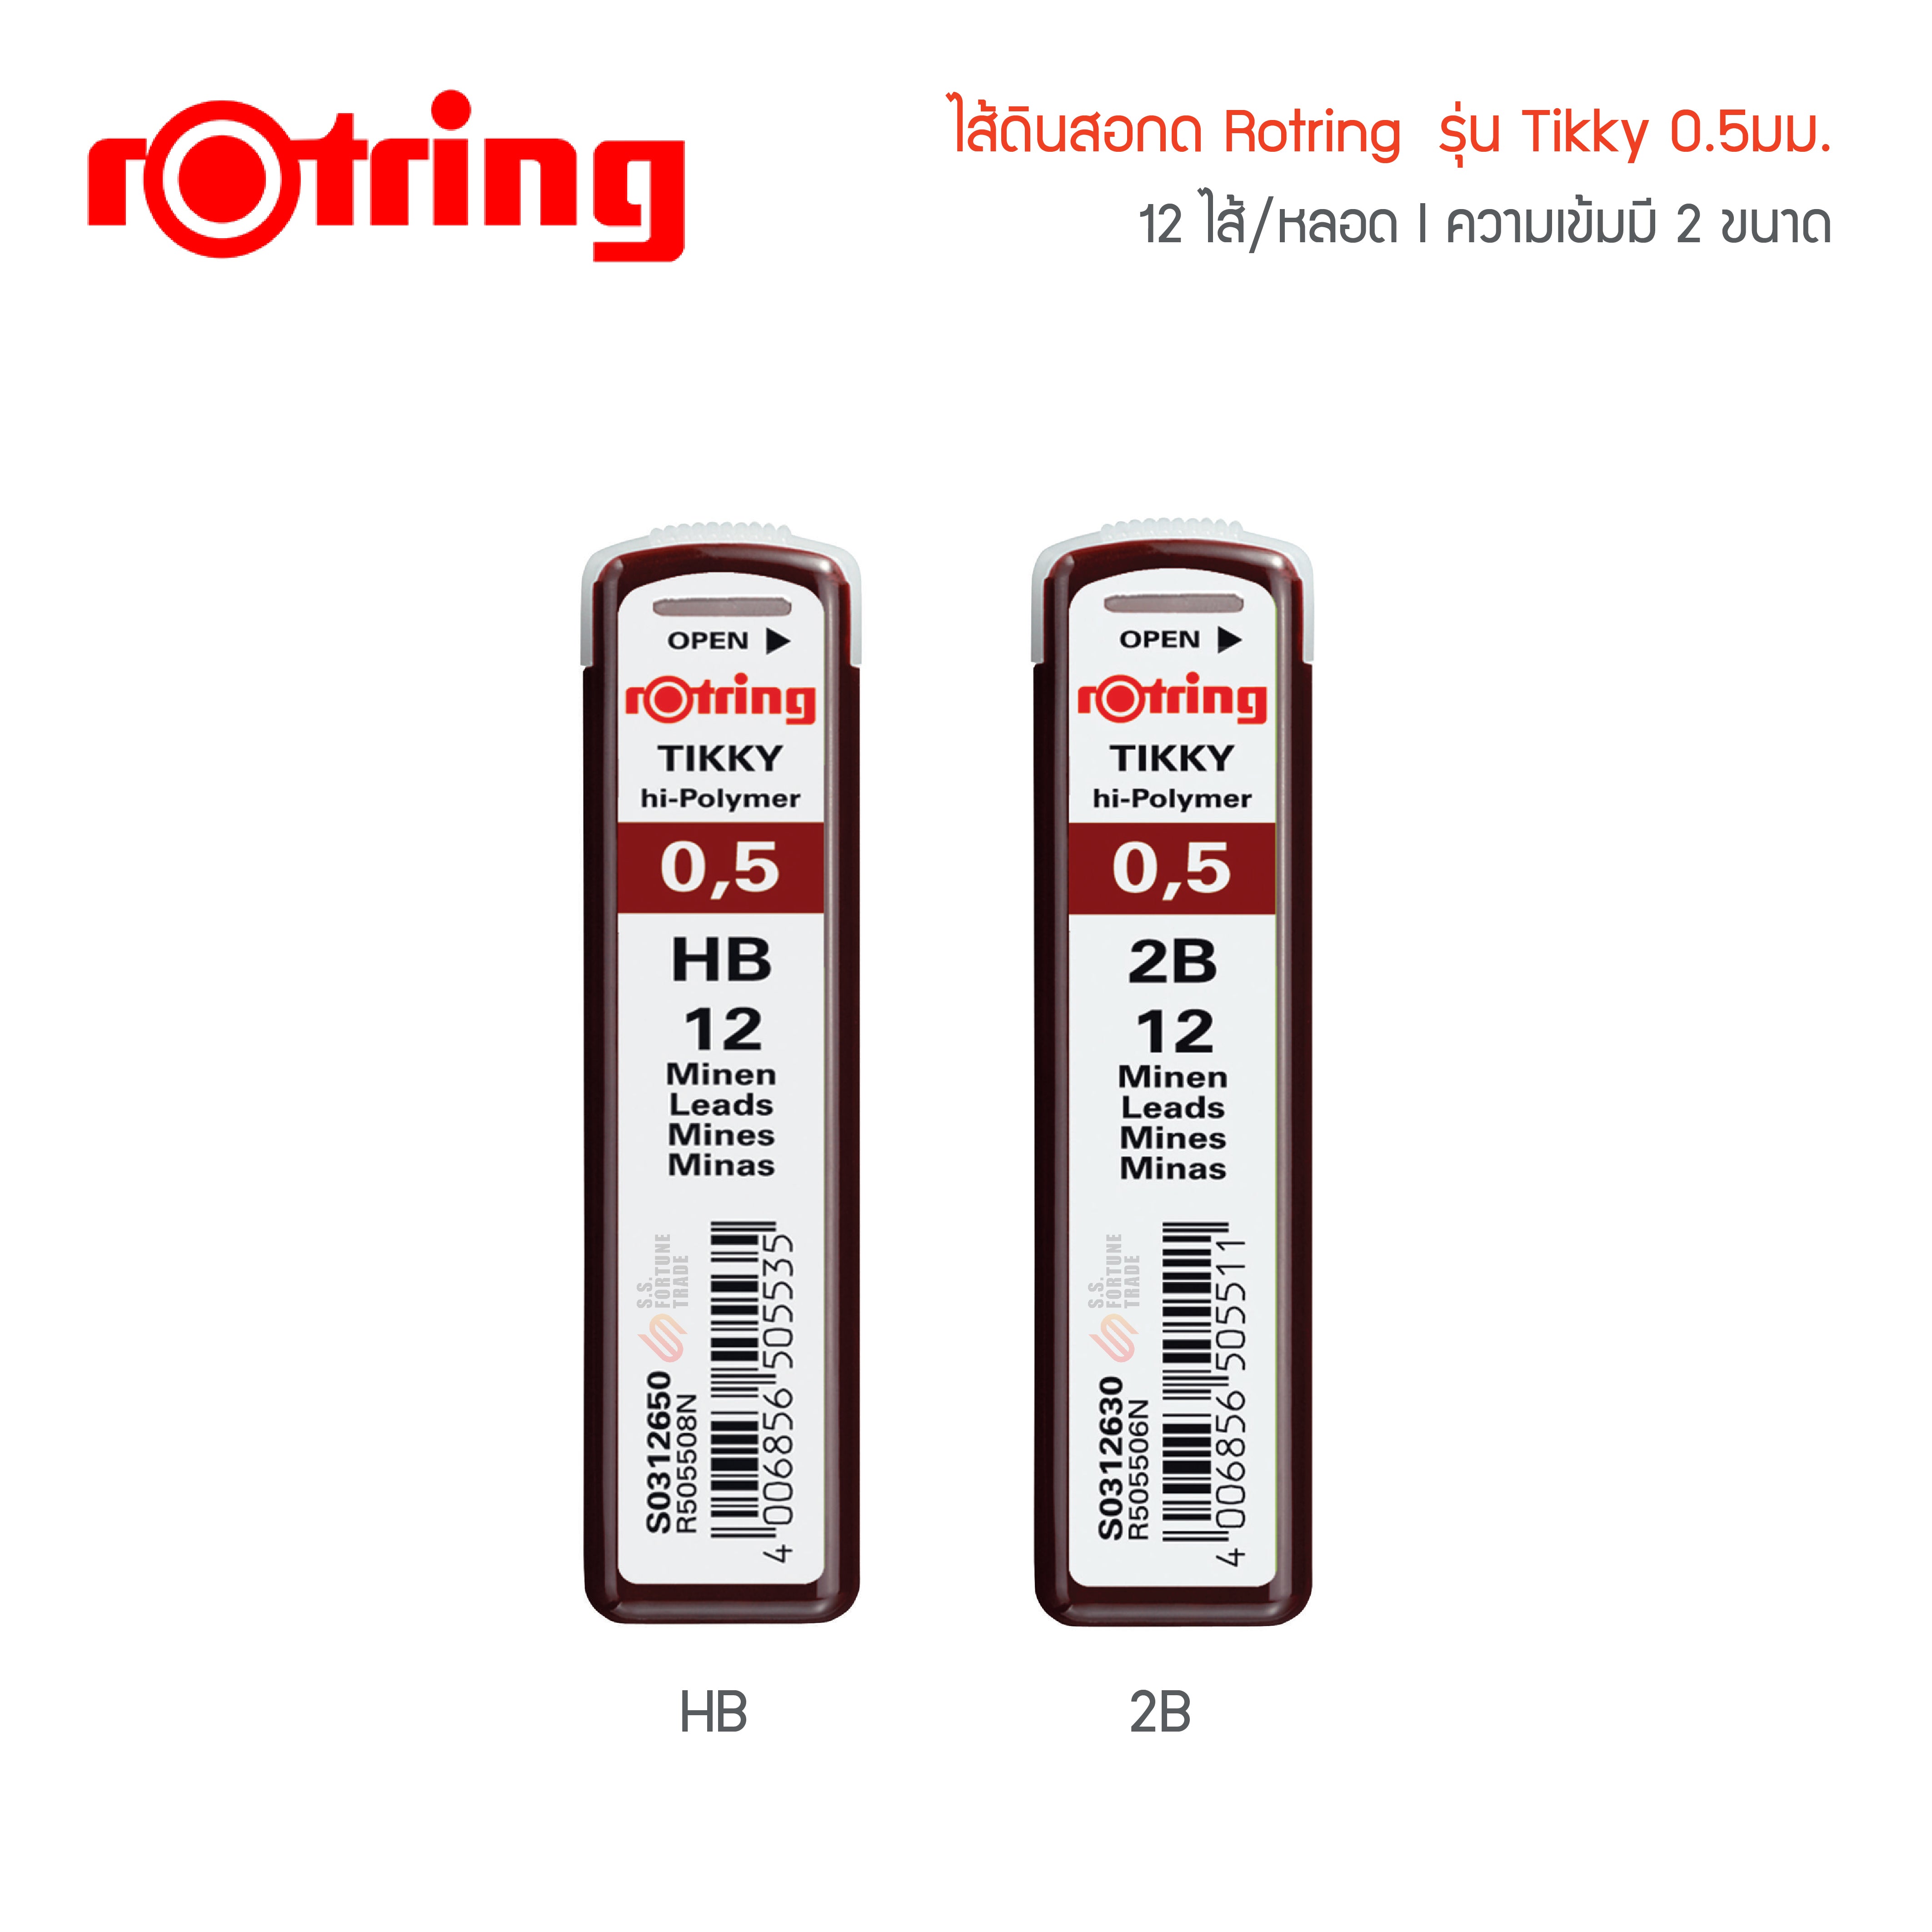 Minas Rotring 0.5 - HB